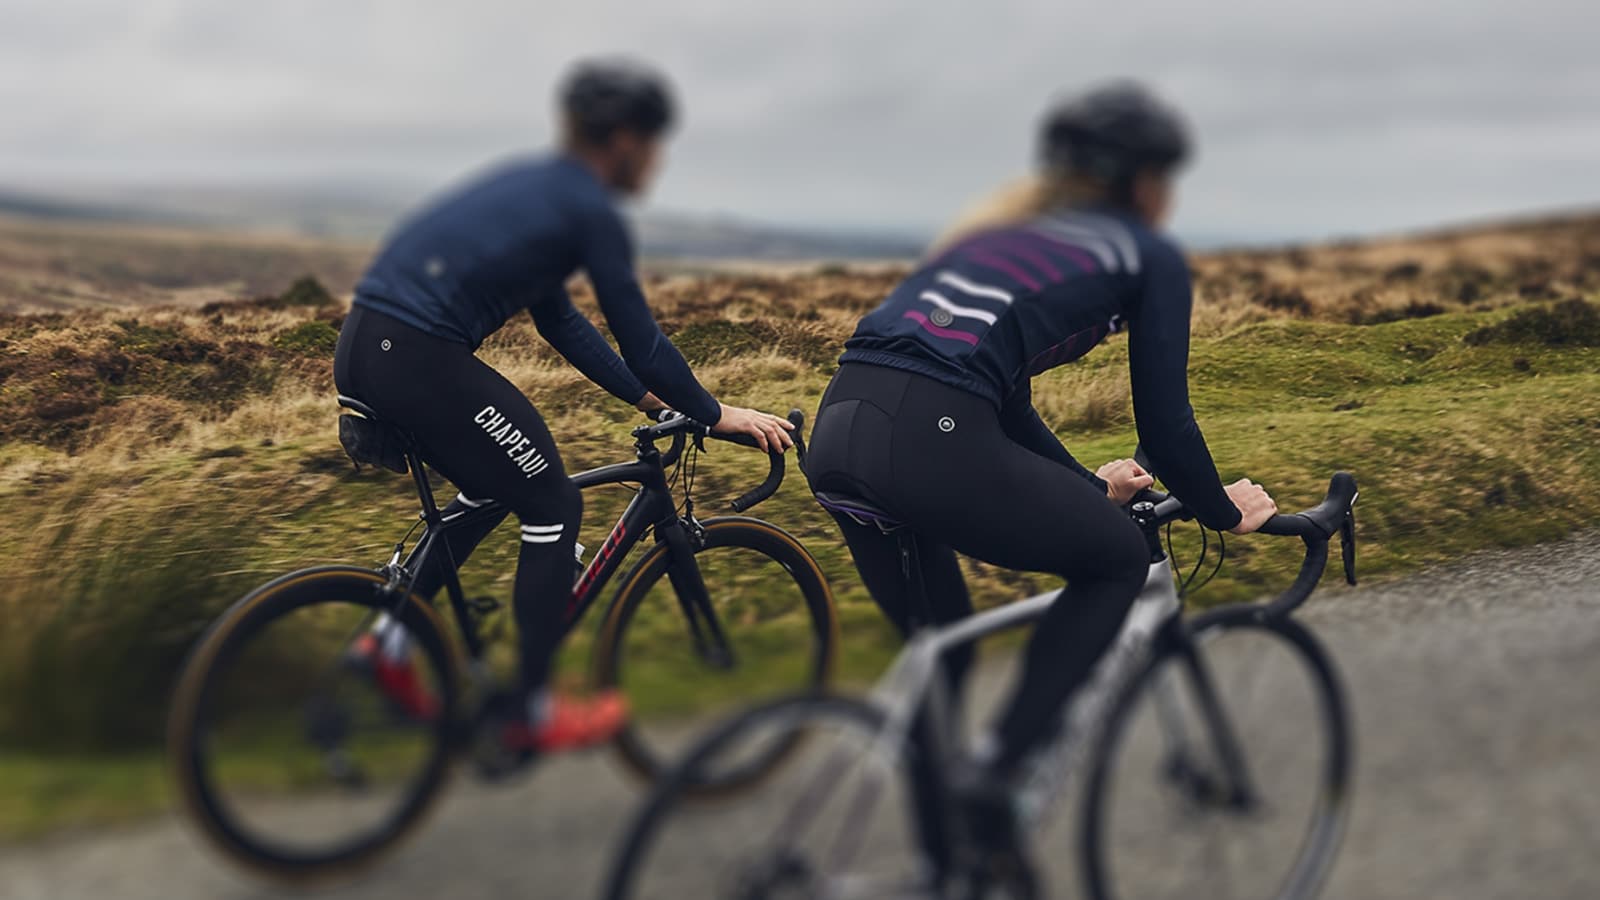 Chapeau cycling apparel – Brand highlight